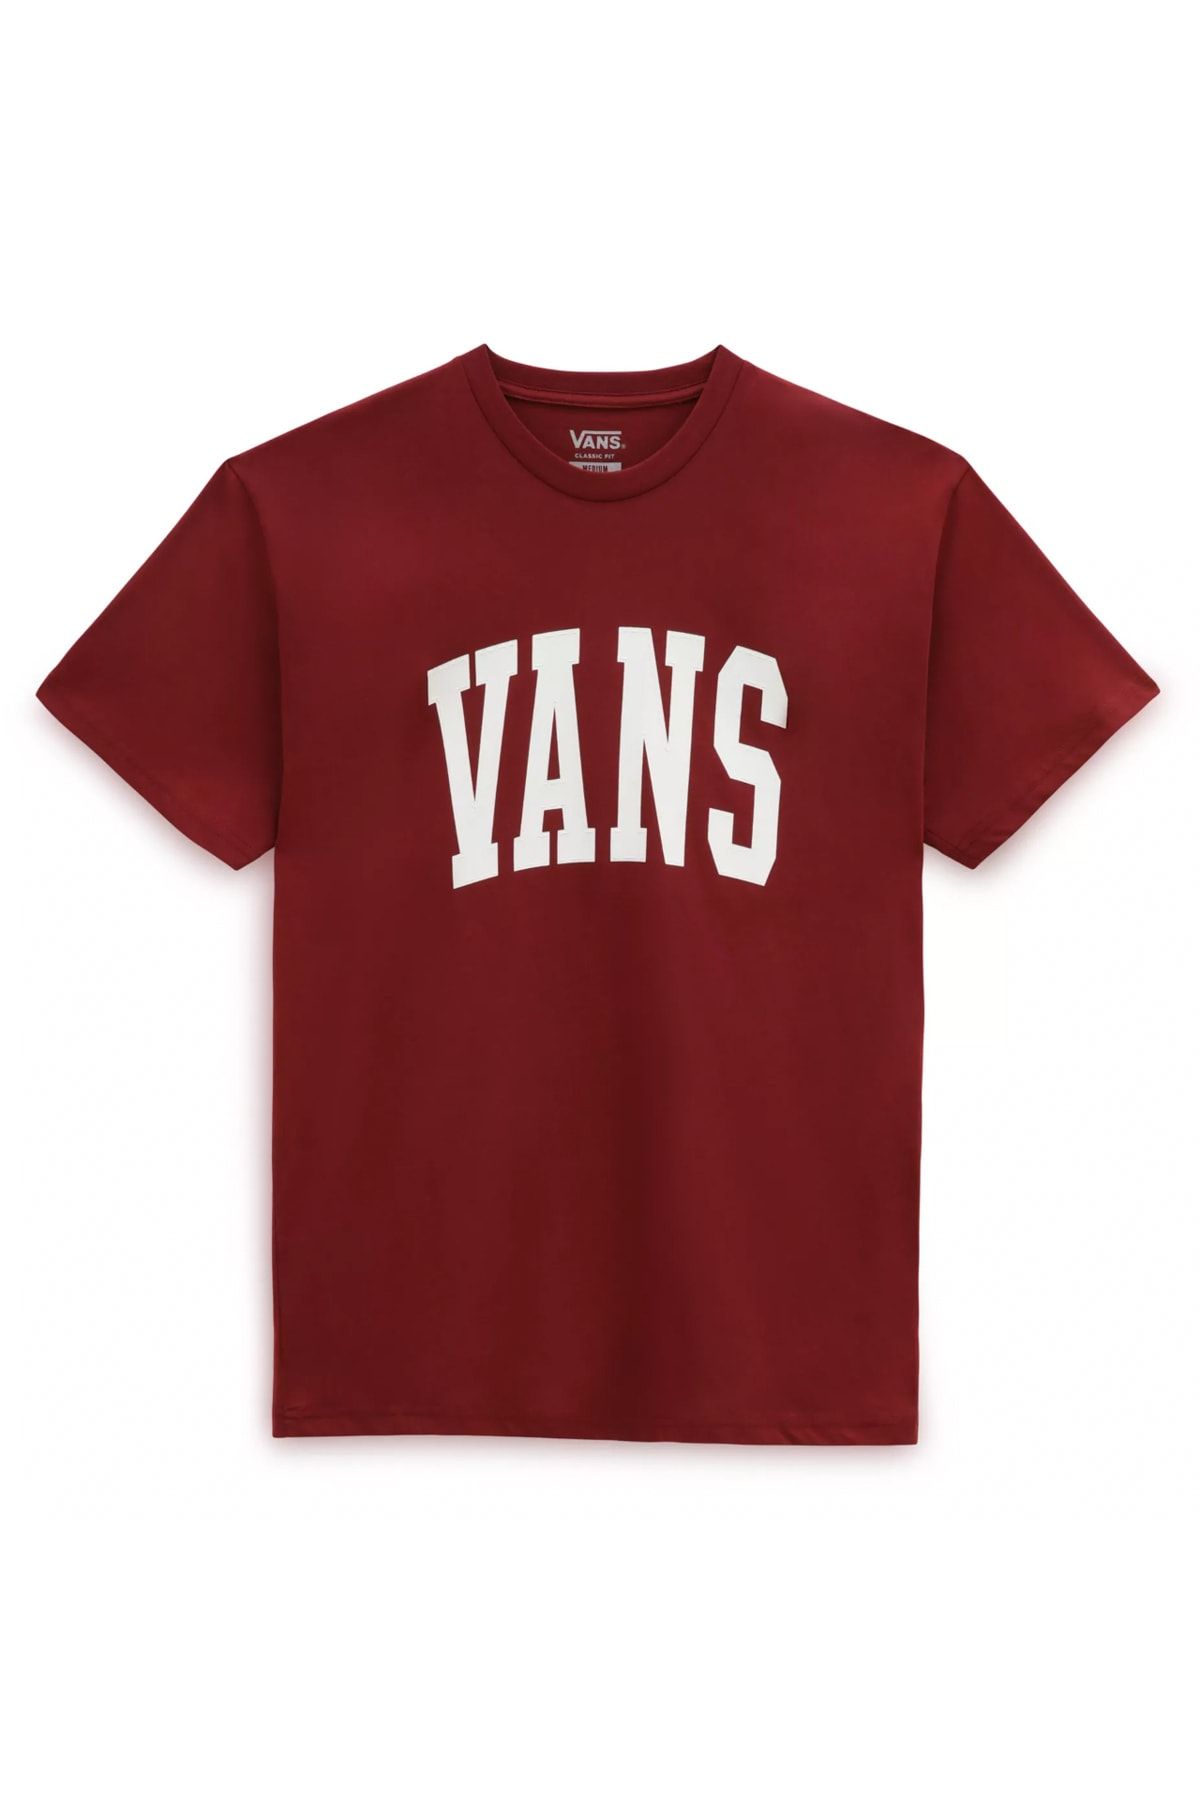 Vans 00003bbqs1-r Varsıty Type Ss Tee Erkek T-shirt Kırmızı